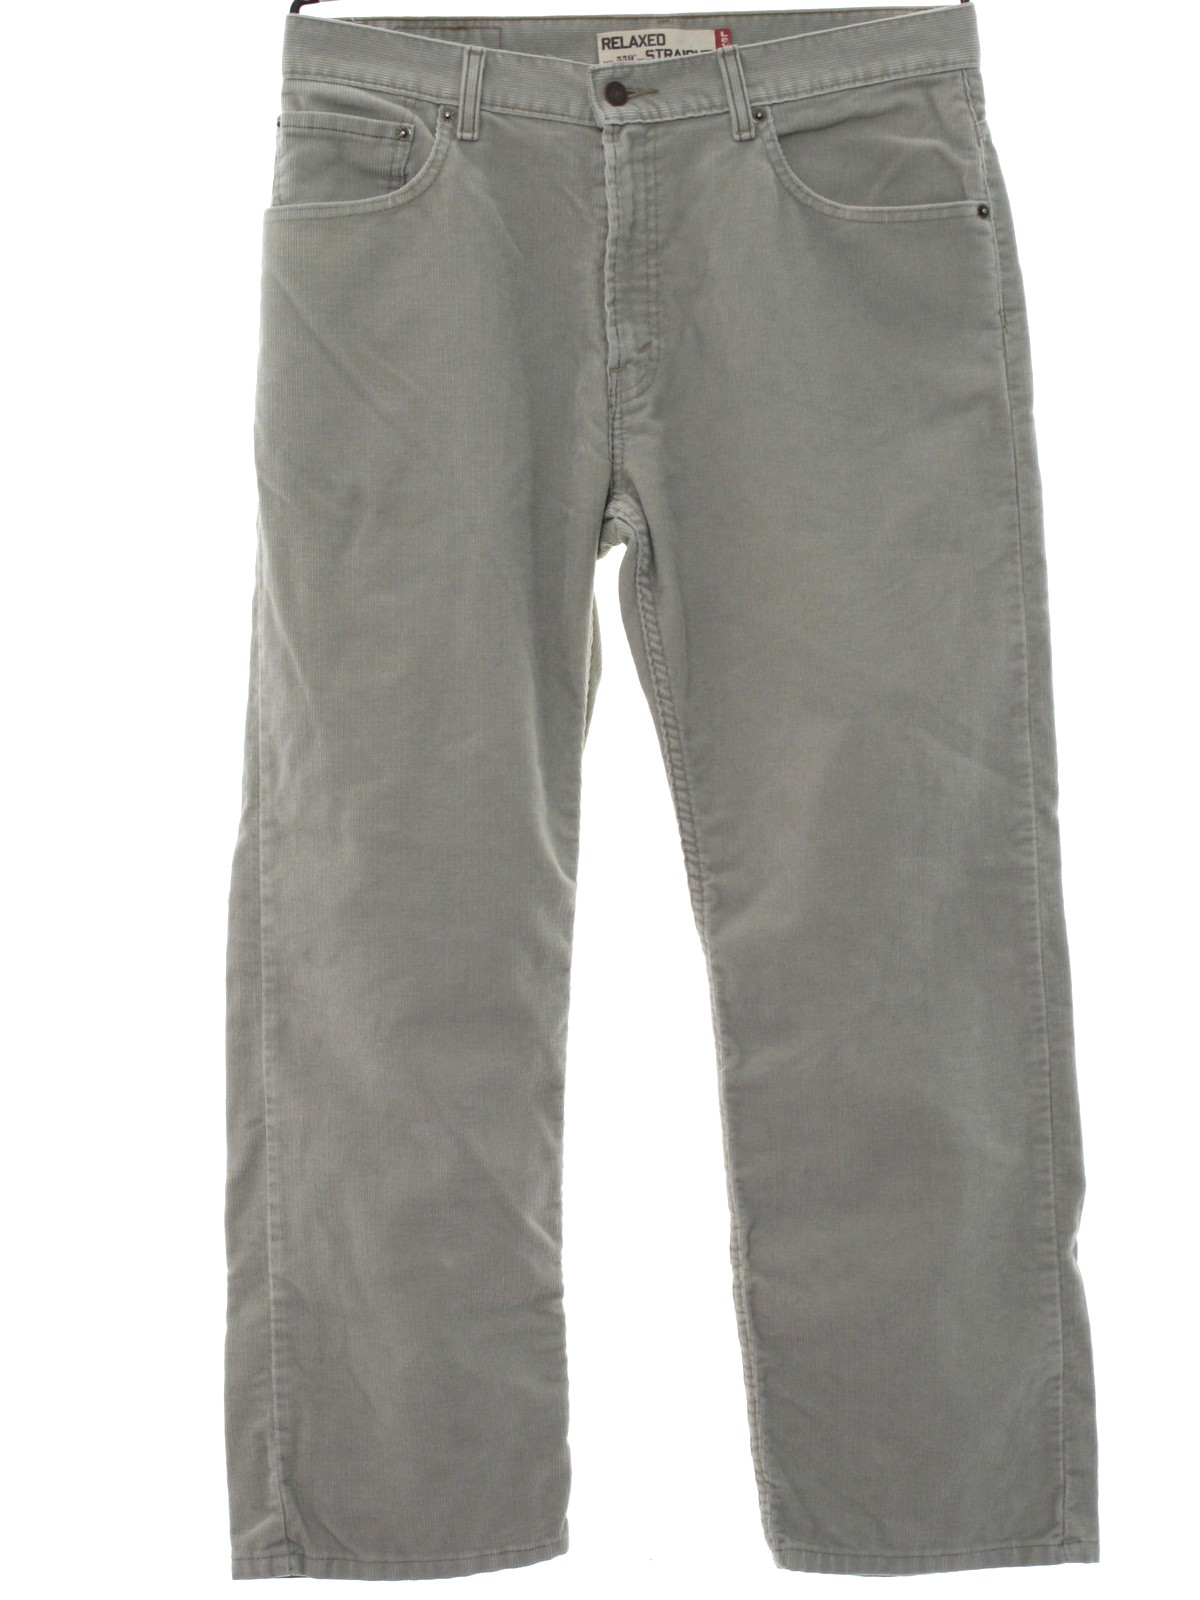 light grey corduroy pants